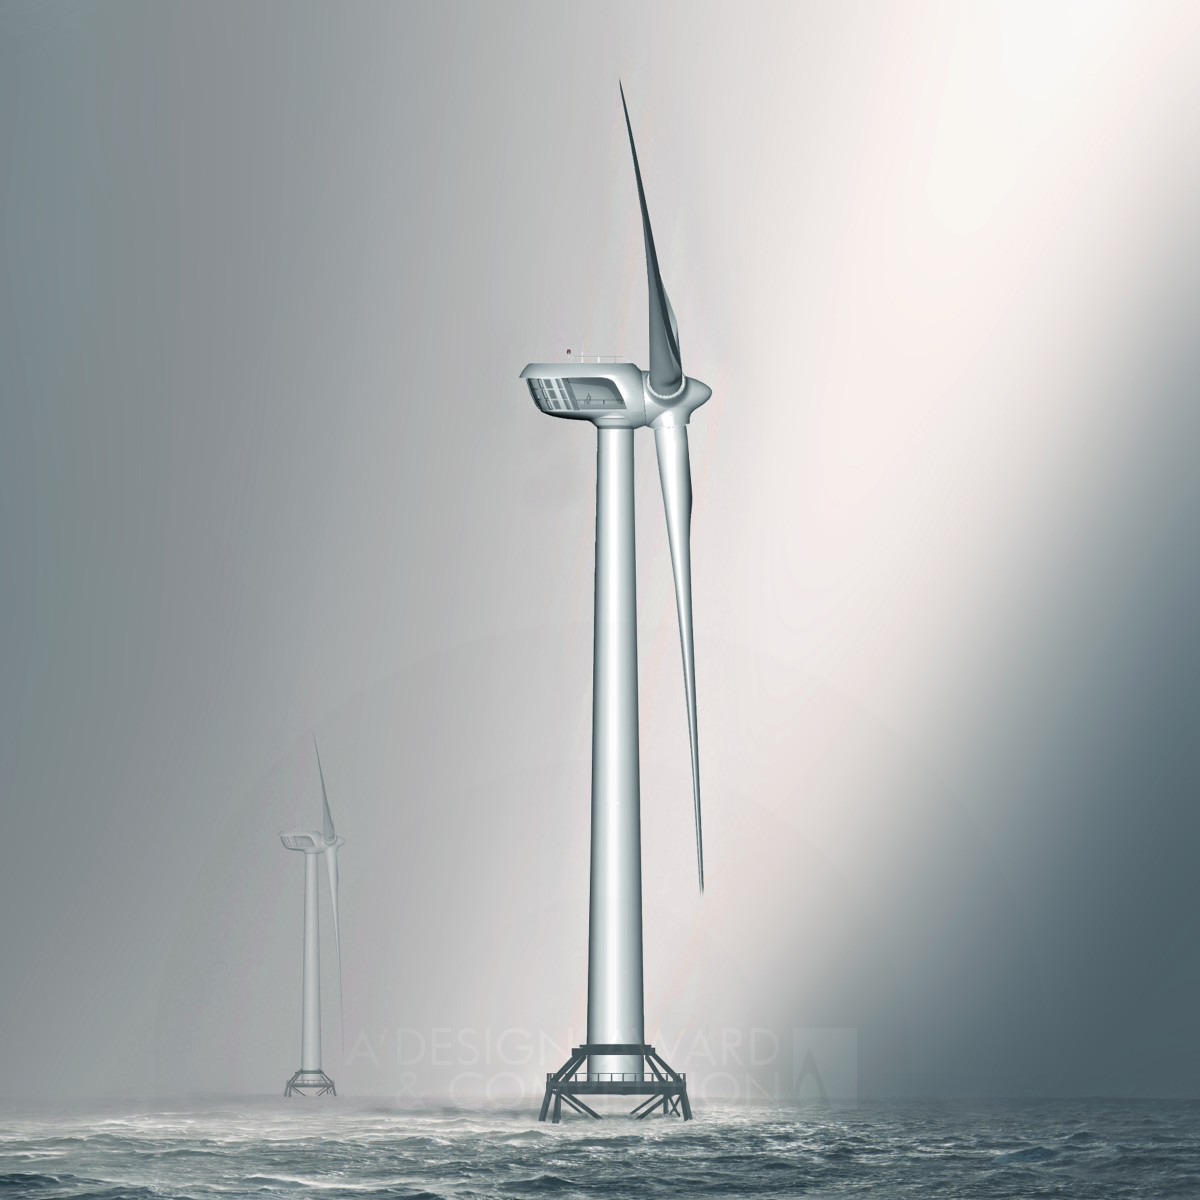 Britannia 10MW Offshore Wind Turbine by Travis Baldwin